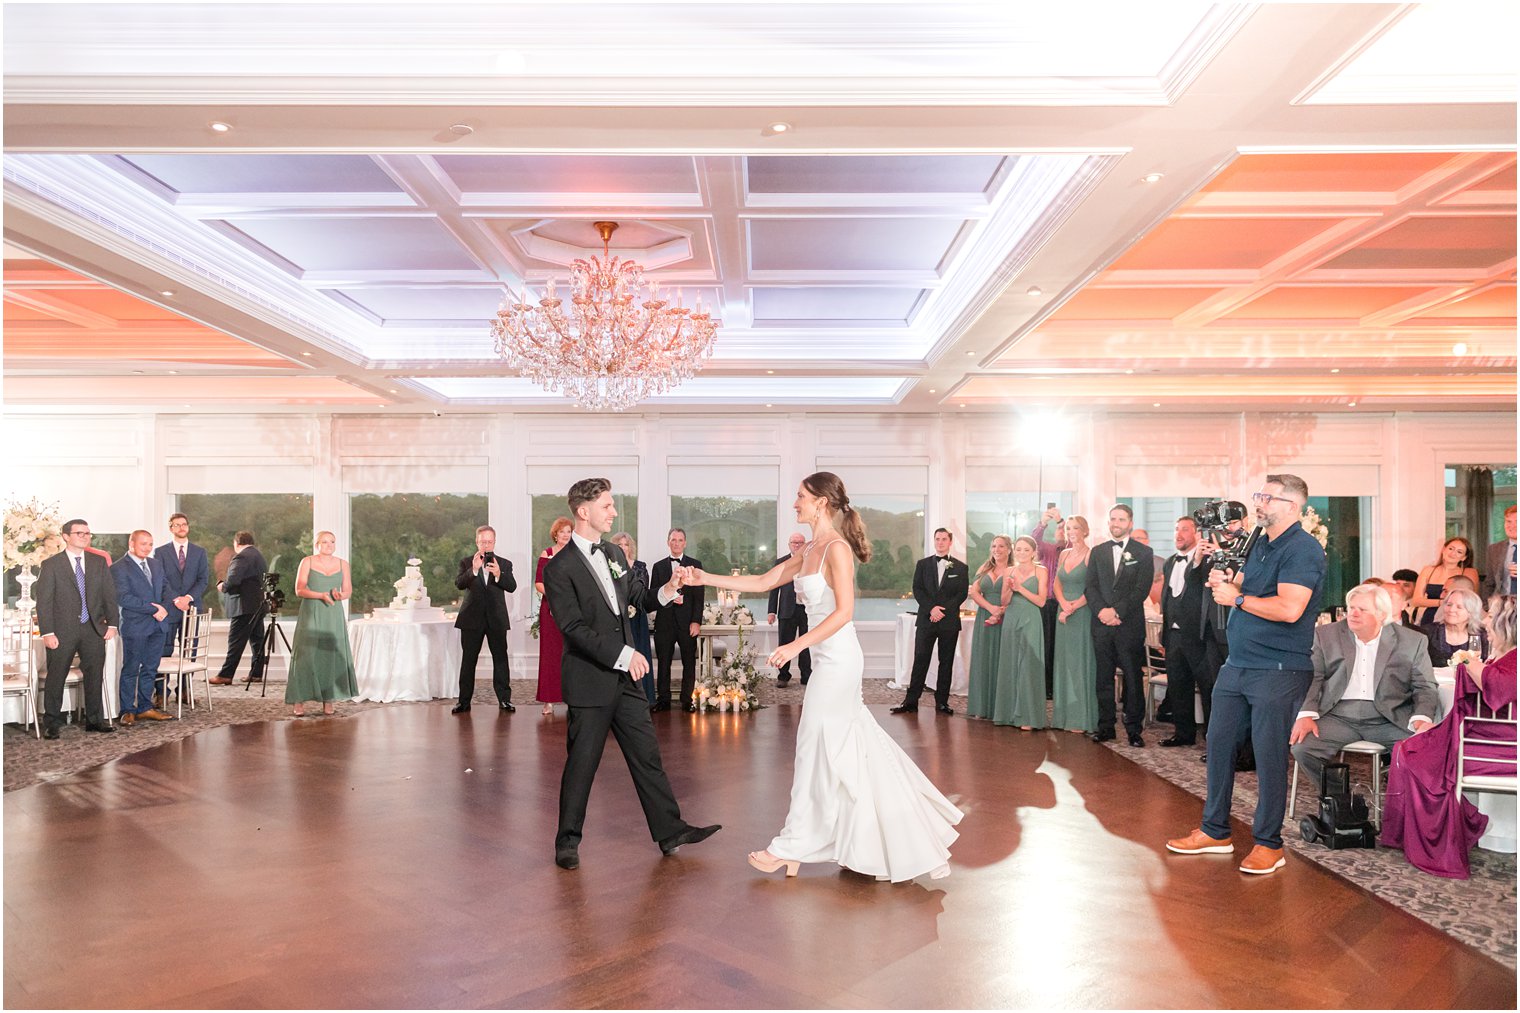 groom leads bride onto dance floor at NJ wedding reception 